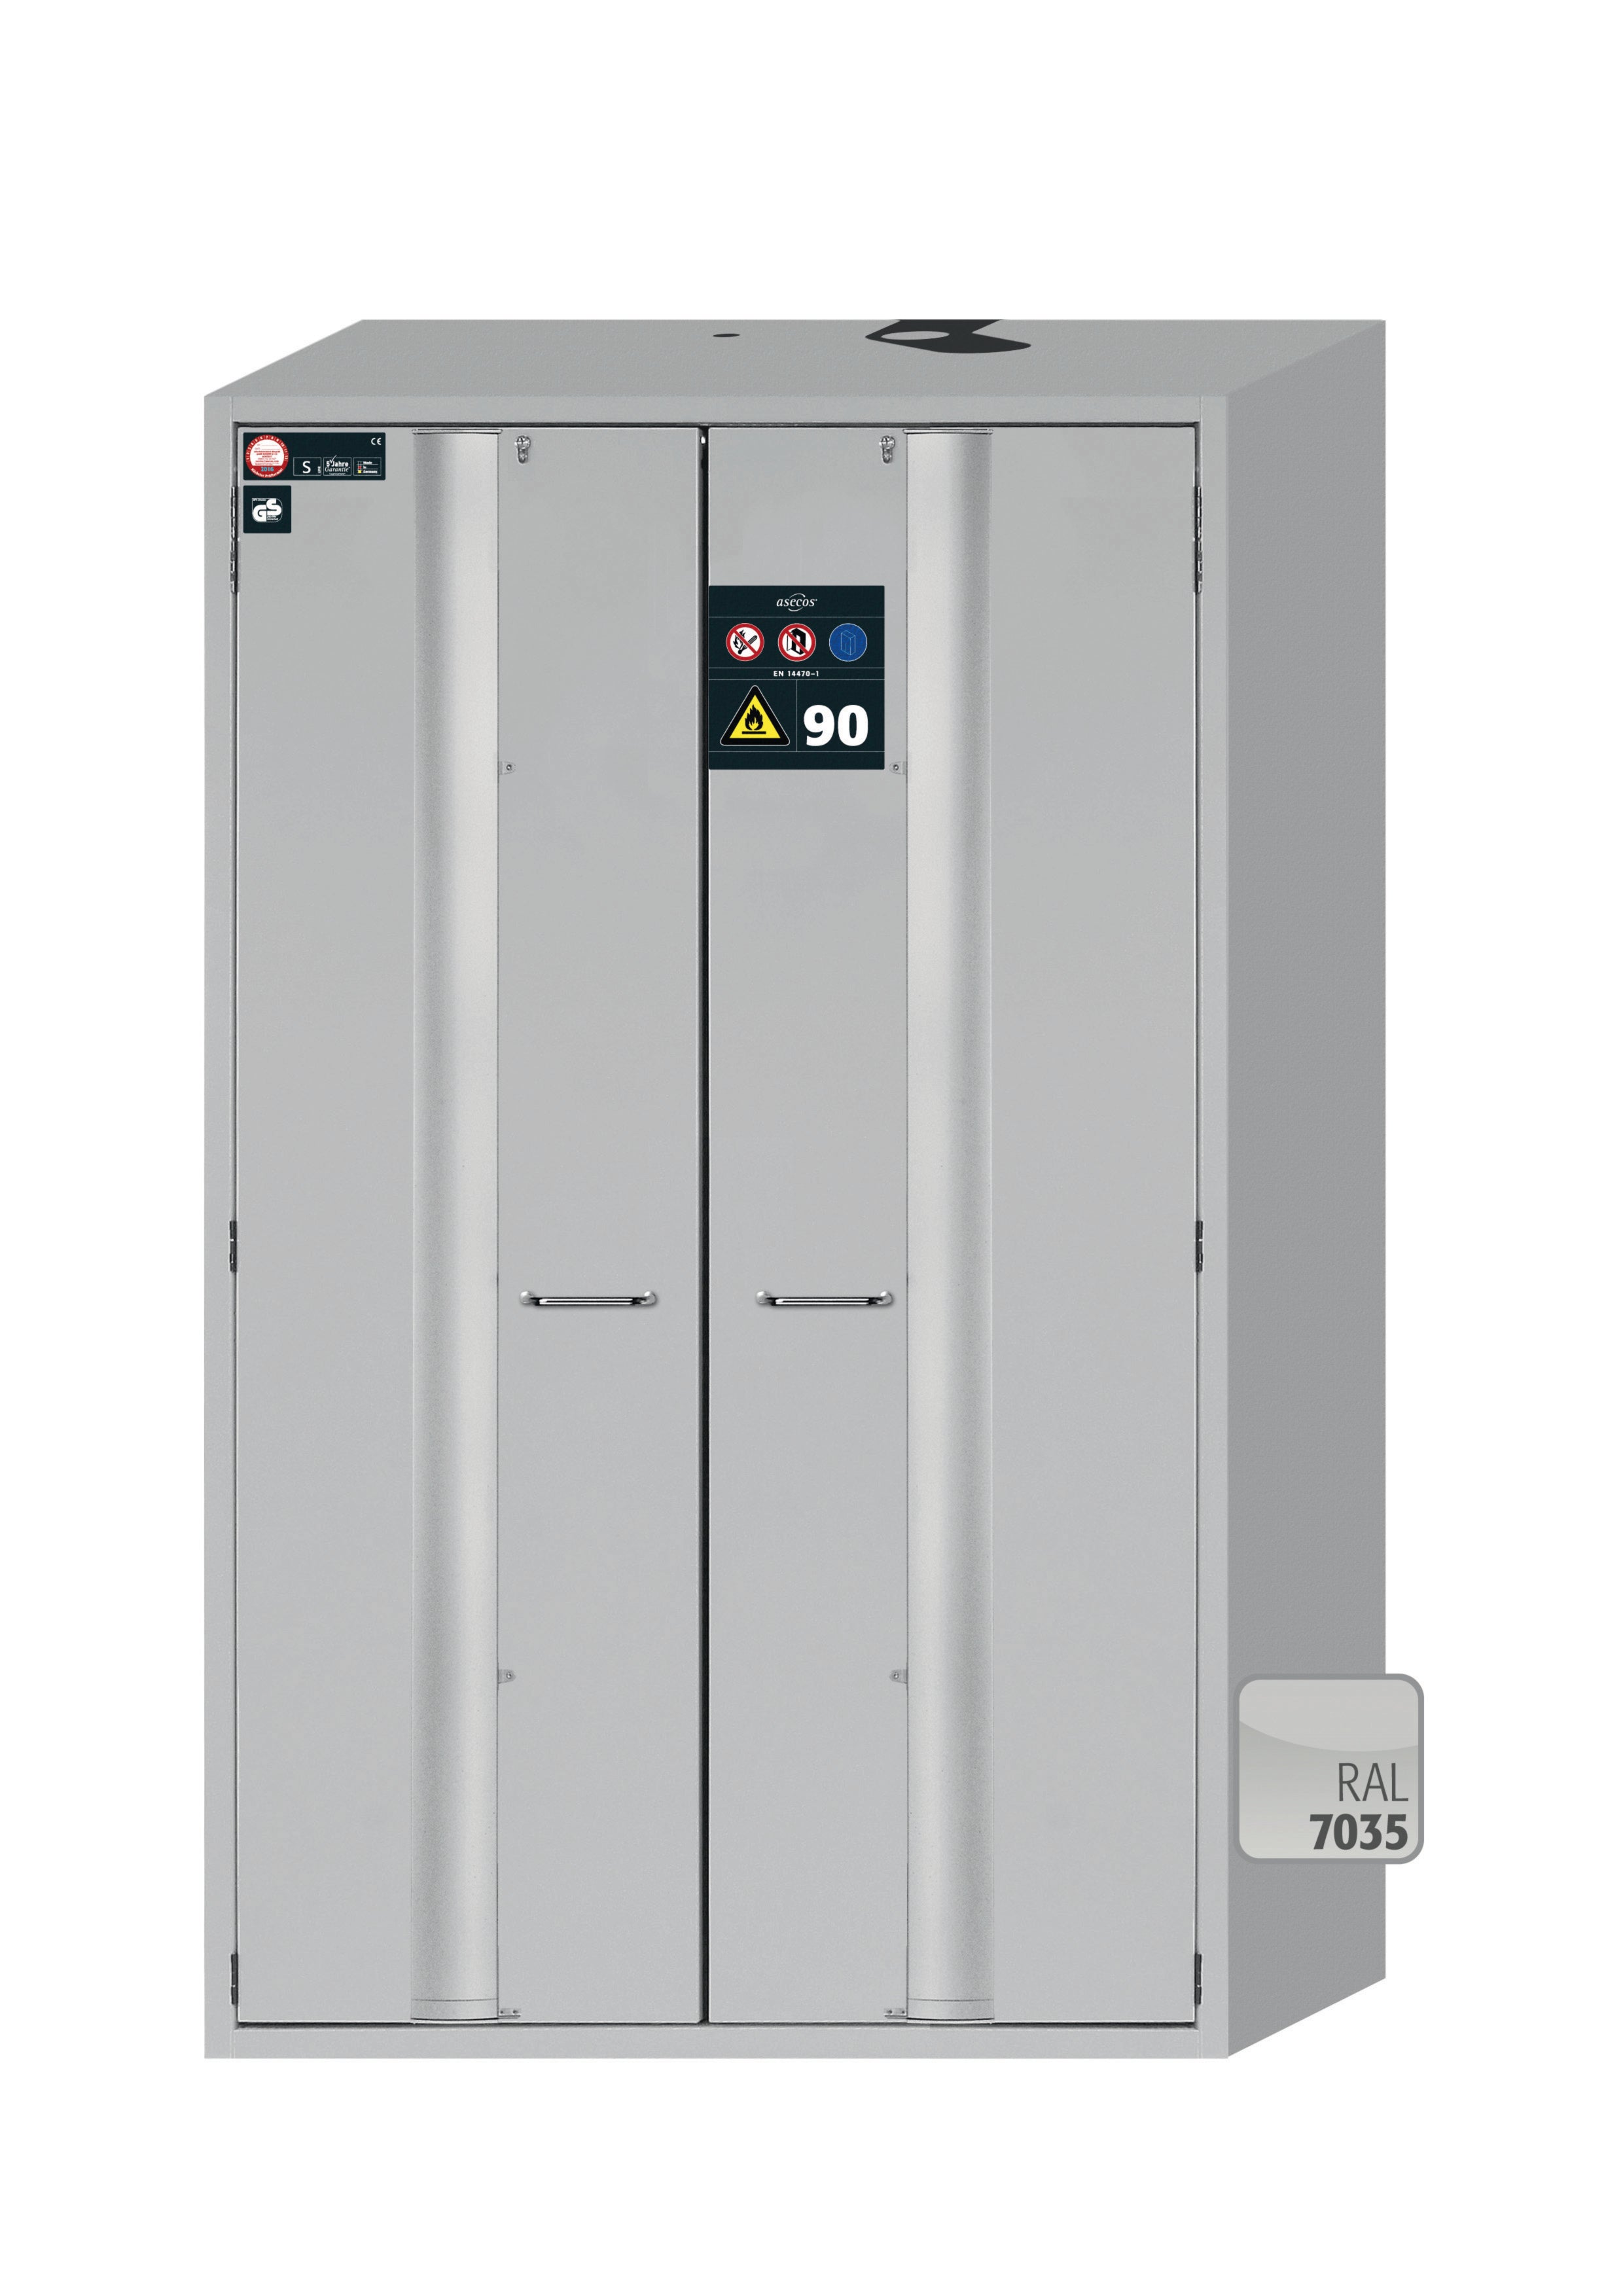 Type 90 safety storage cabinet S-PHOENIX-90 model S90.196.120.FDAS in light grey RAL 7035 with 5x drawer (standard) (sheet steel),